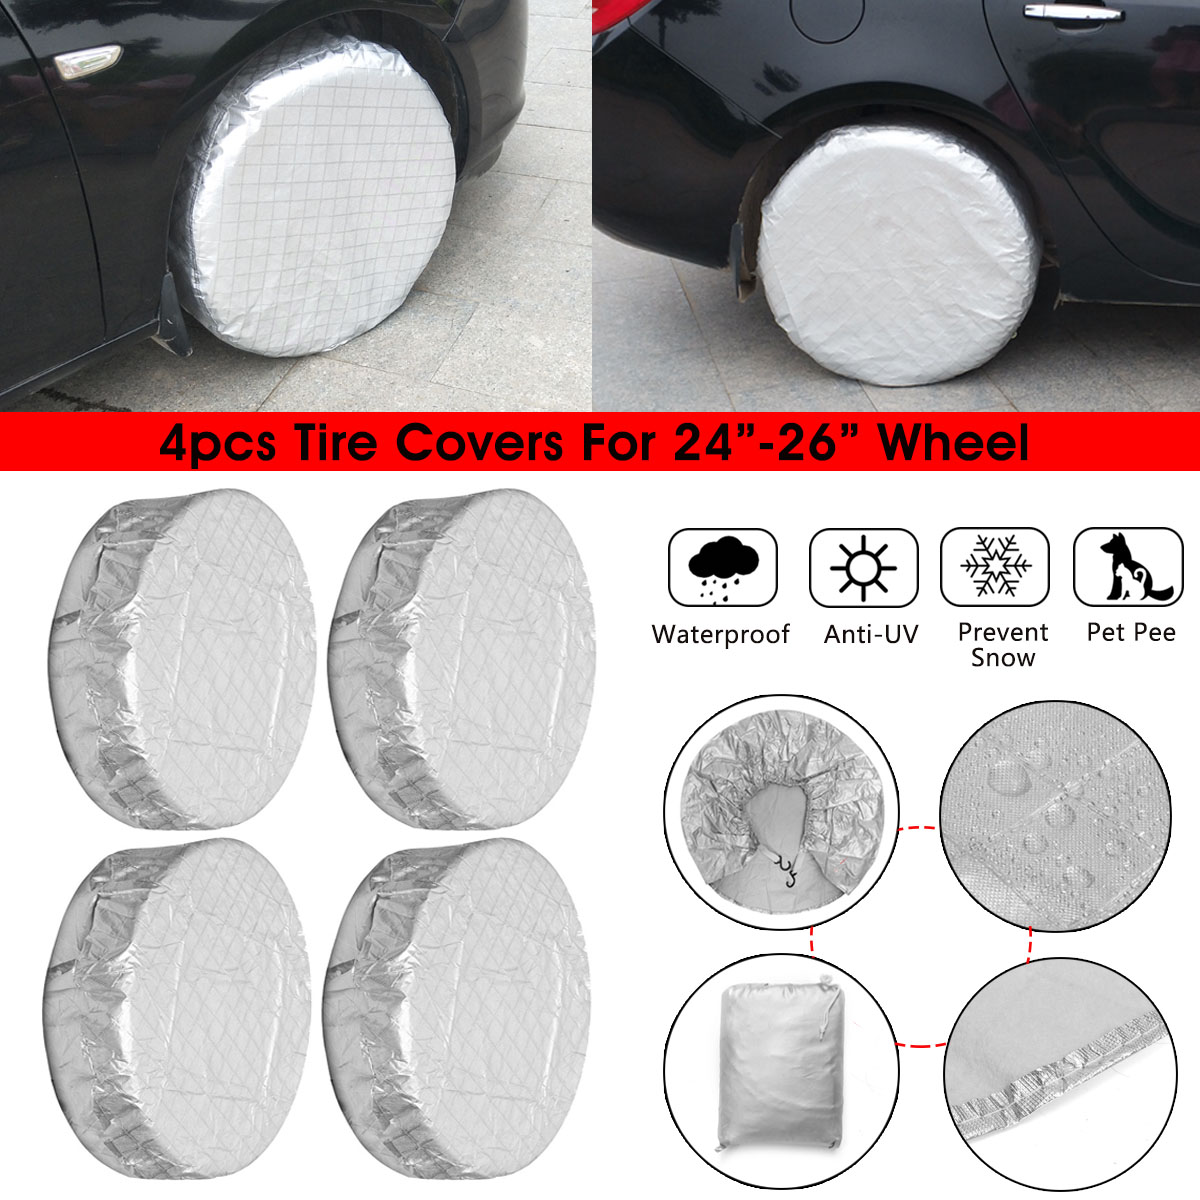 4pcs Car RV Wheel Cover 24"-26"/27''-29"/30-32" Tire Covers Waterproof Dustproof for Camper Motorhome Truck